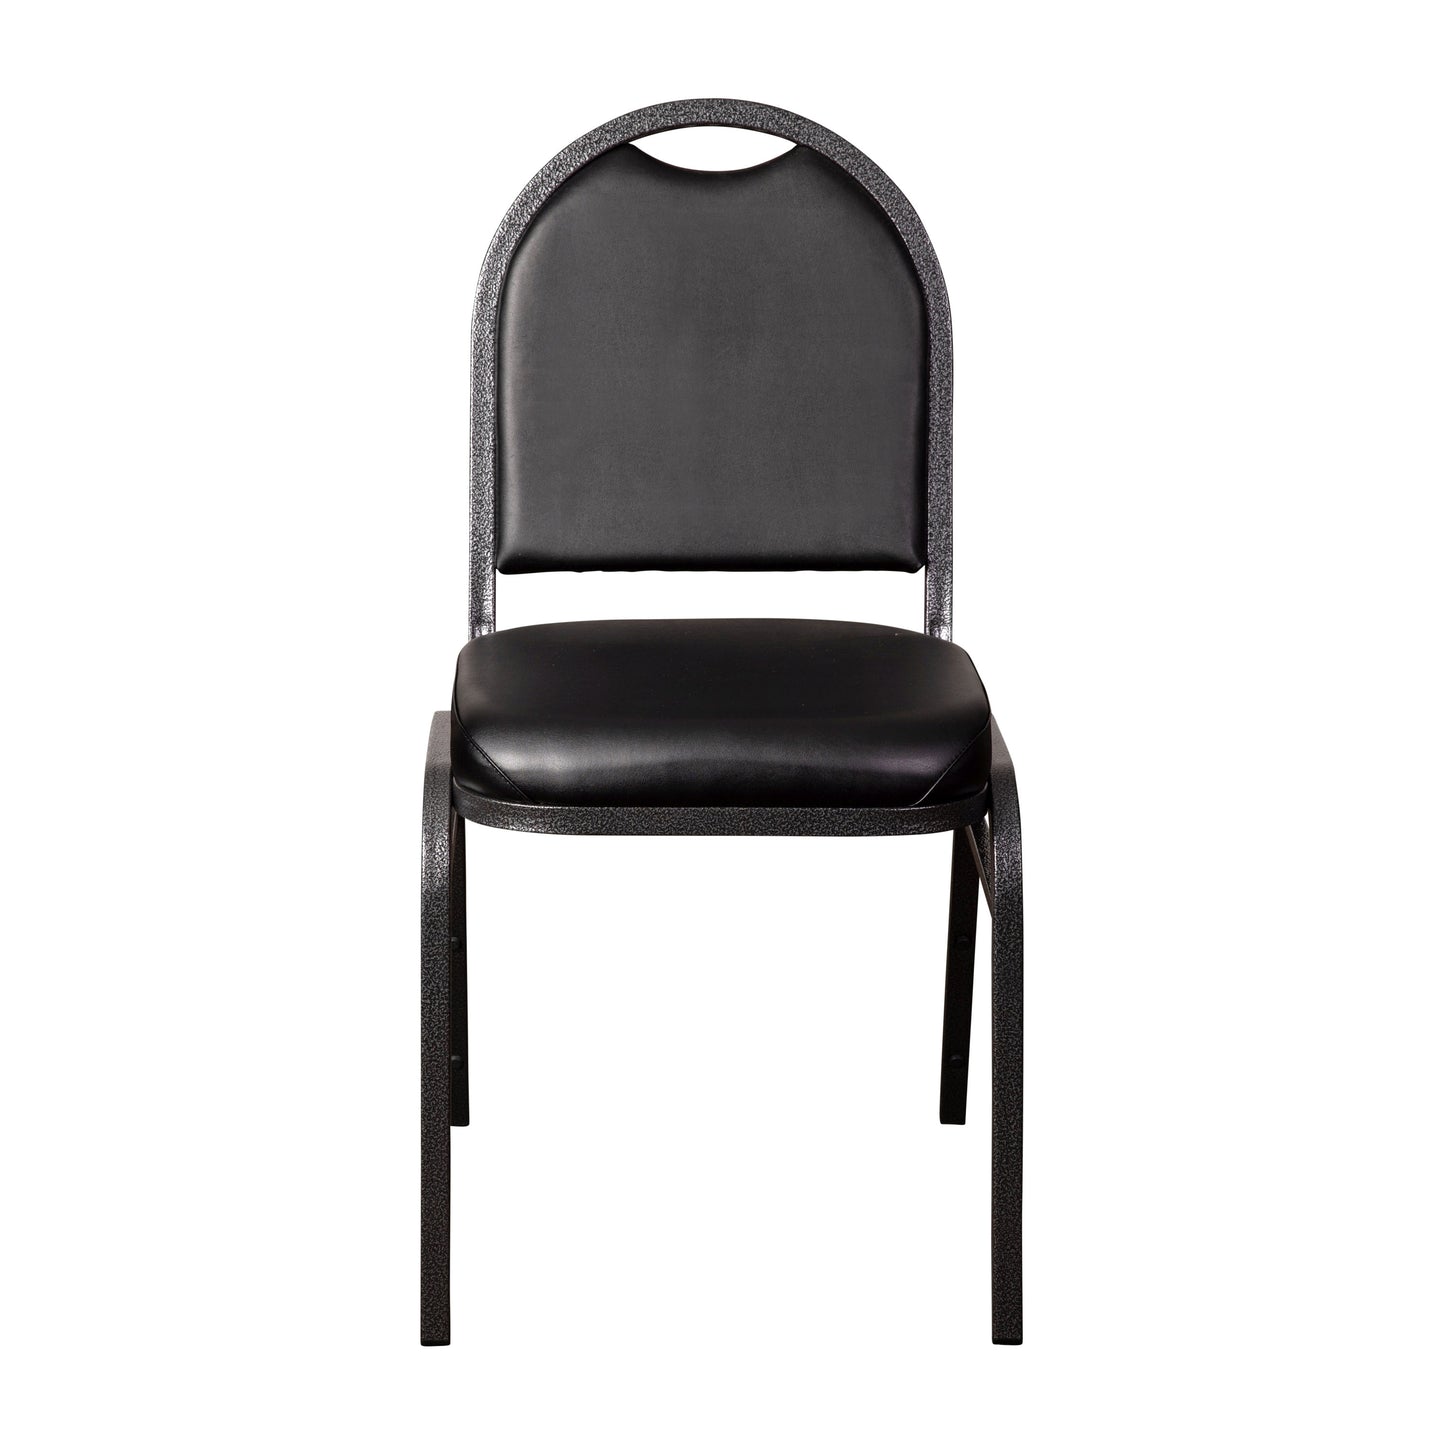 Black/Silver Vein Stack Chair NG-ZG10006-BK-SILVERVEIN-GG